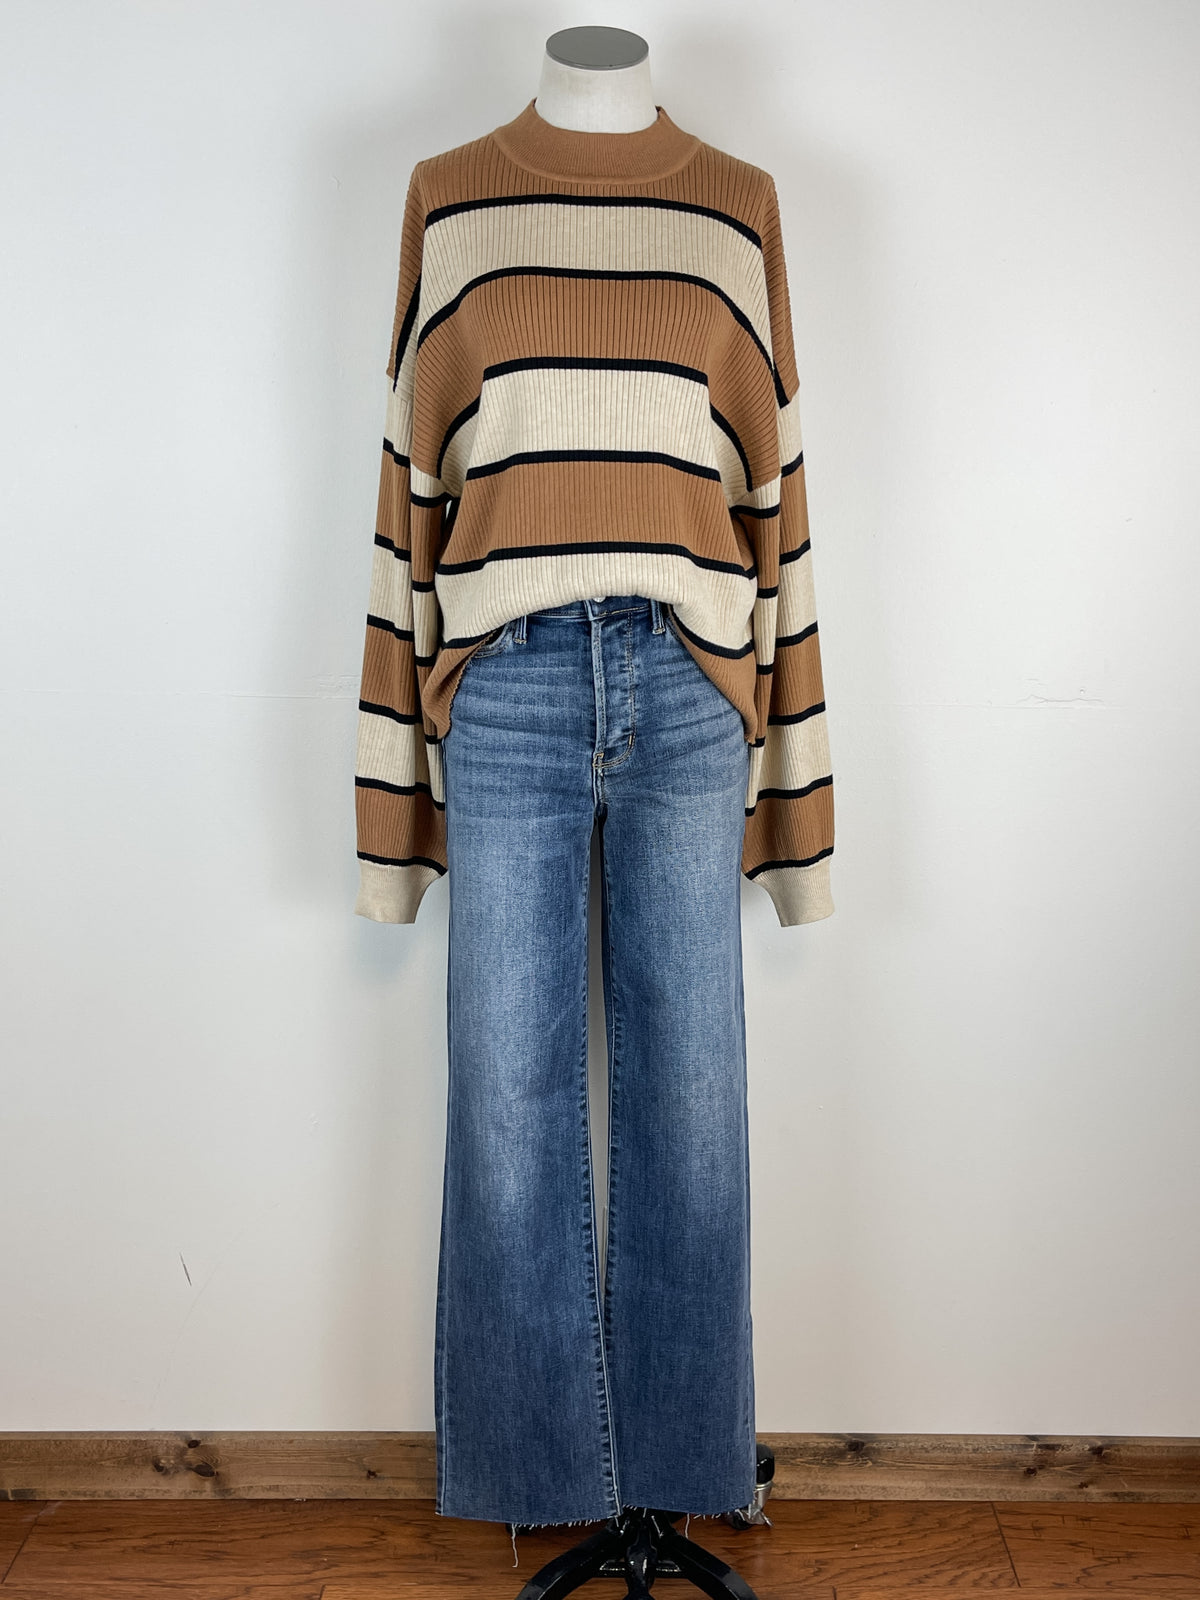 Kori Striped Mock Neck Sweater in Cream/Camel